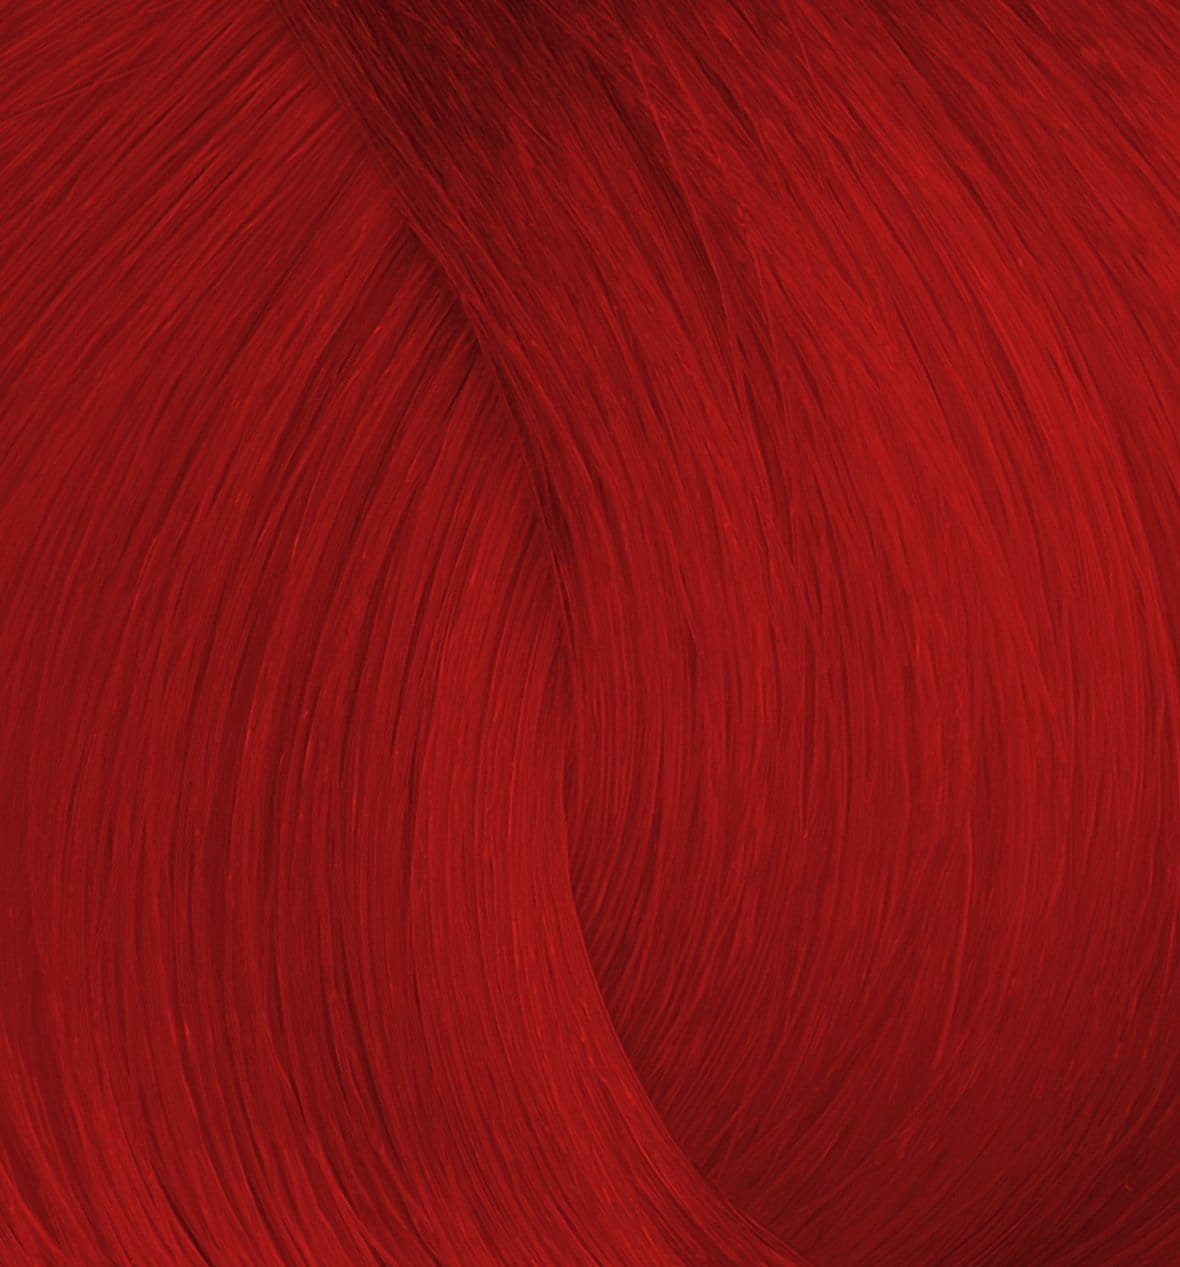 Pravana ChromaSilk VIVIDS Everlasting Scarlette Red - HairBeautyInk